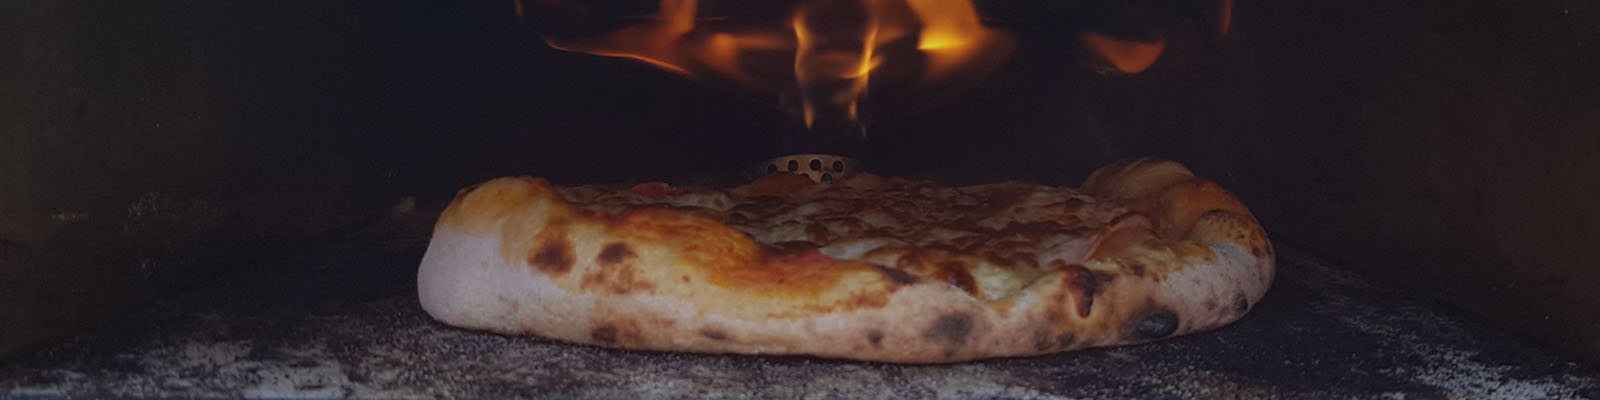 freshly-fermented-how-to-make-sourdough-pizza